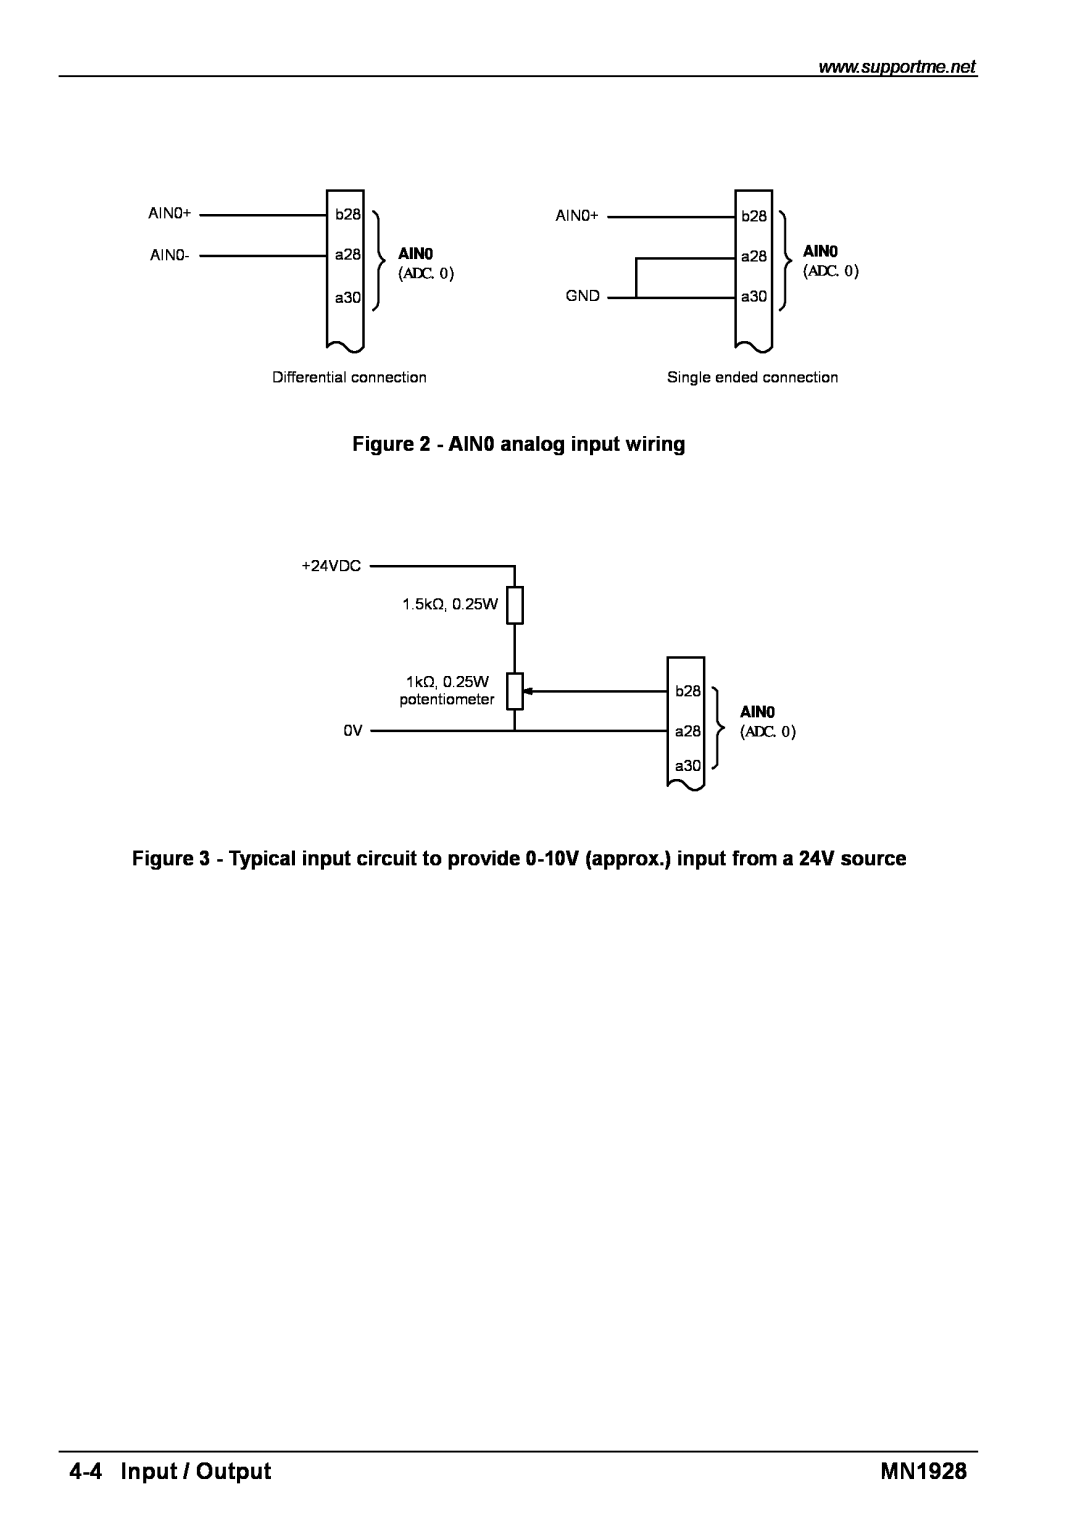 Baldor MN1928 installation manual Input / Output, AIN0 analog input wiring 